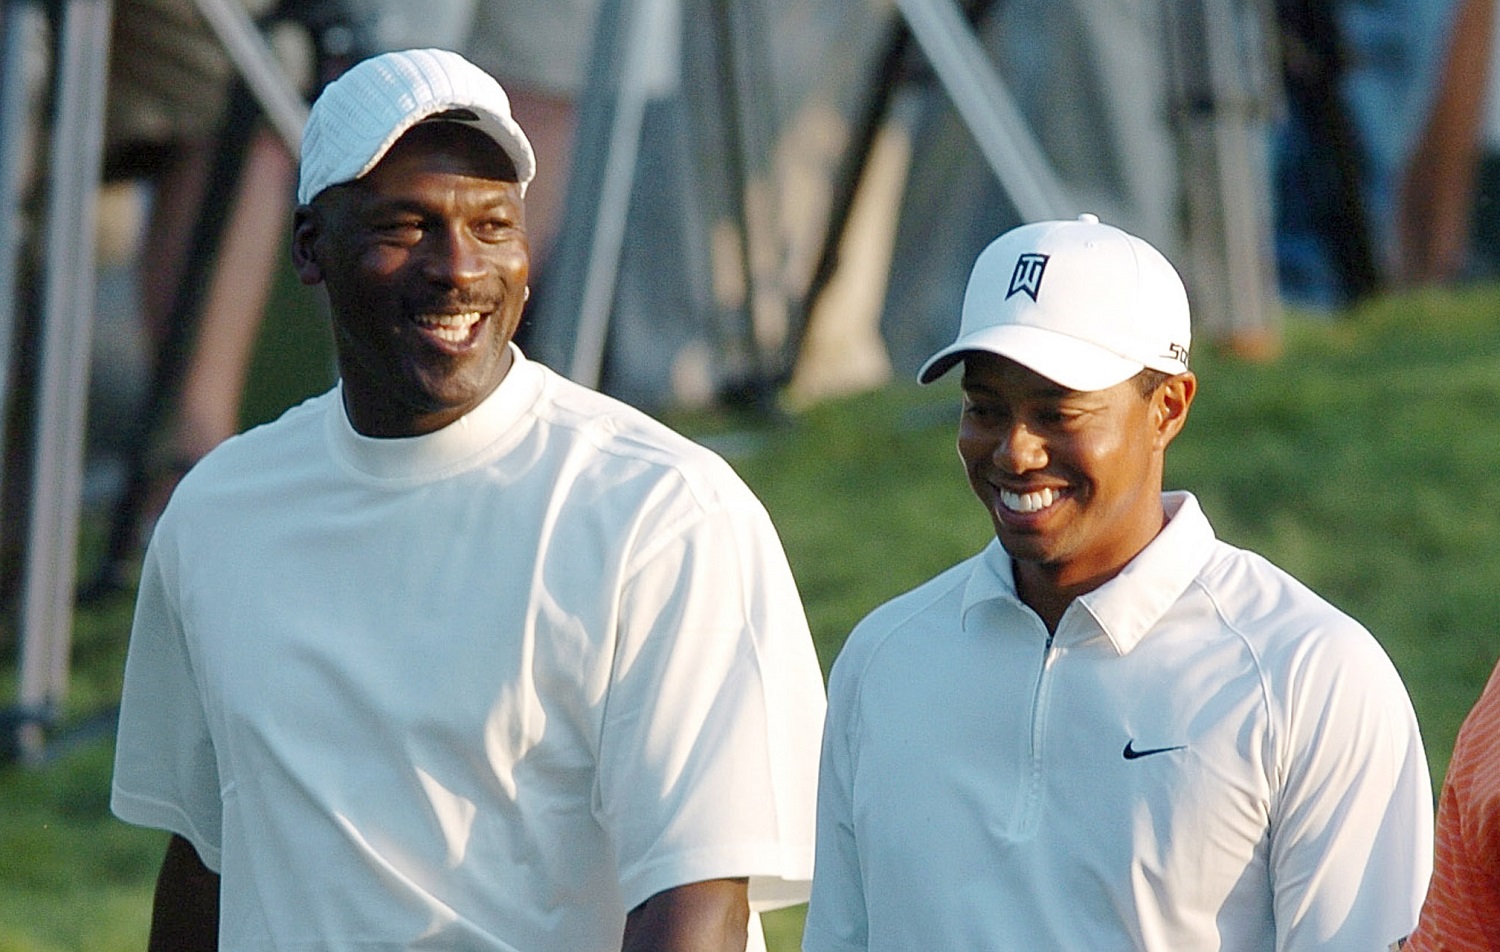 Michael Jordan’s Gloating Message to Tiger Woods: ‘I Don’t Take Checks’